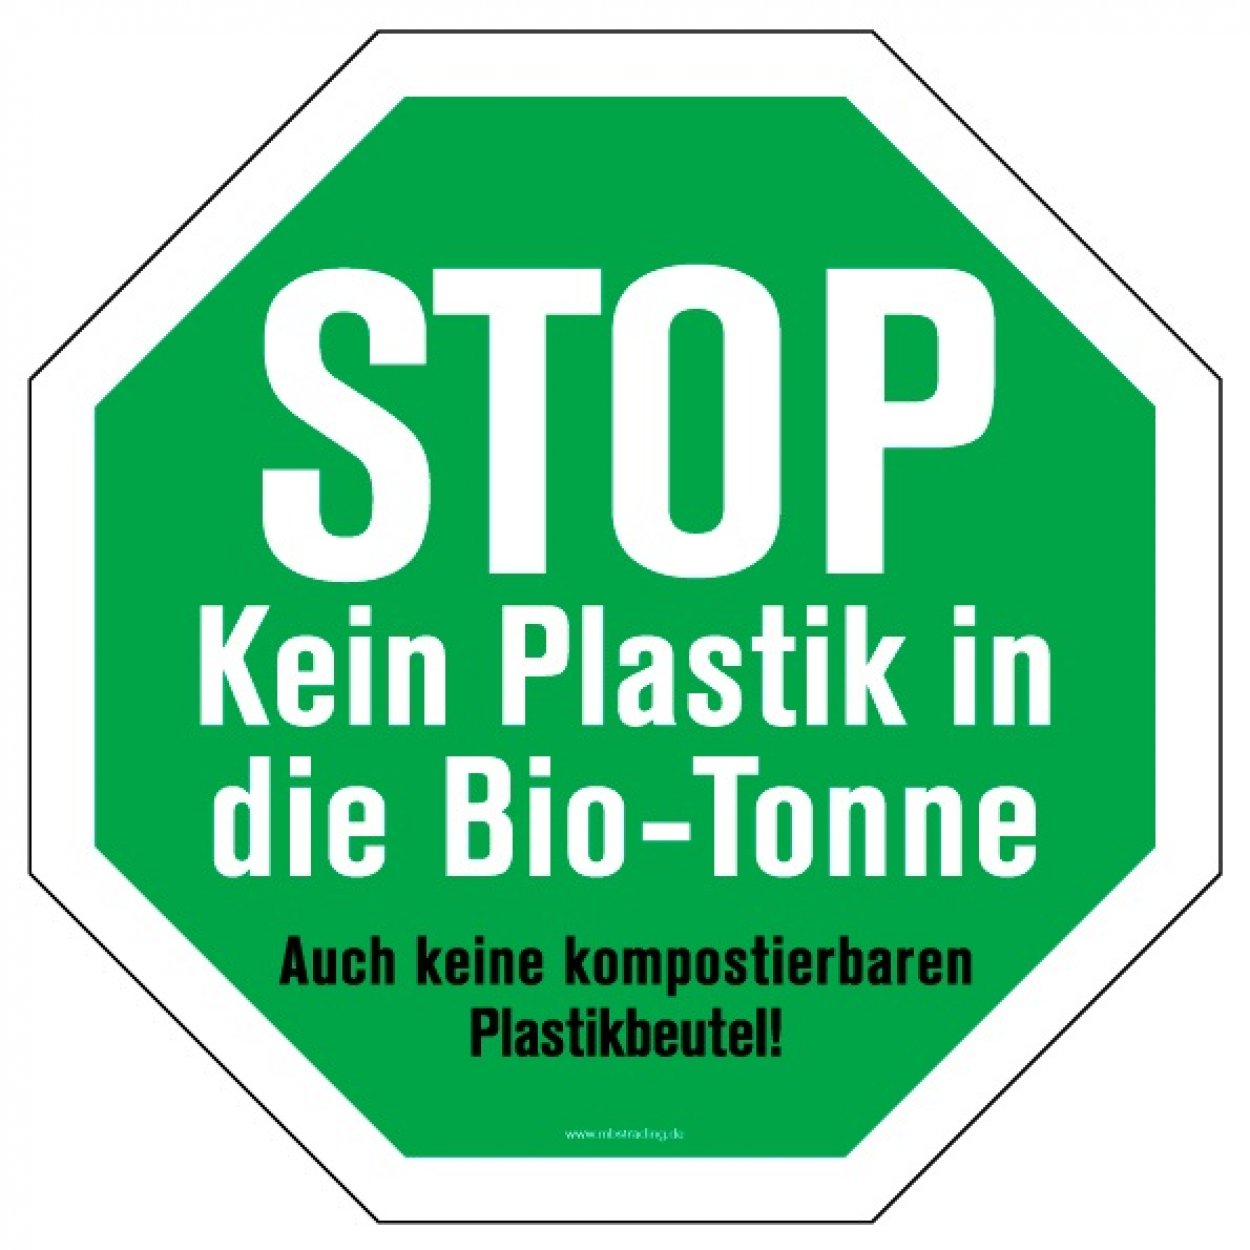 Aufkleber Hinweis "STOP Biotonne.." Recycling Schild Folie Oktogon, grün 5-30cm